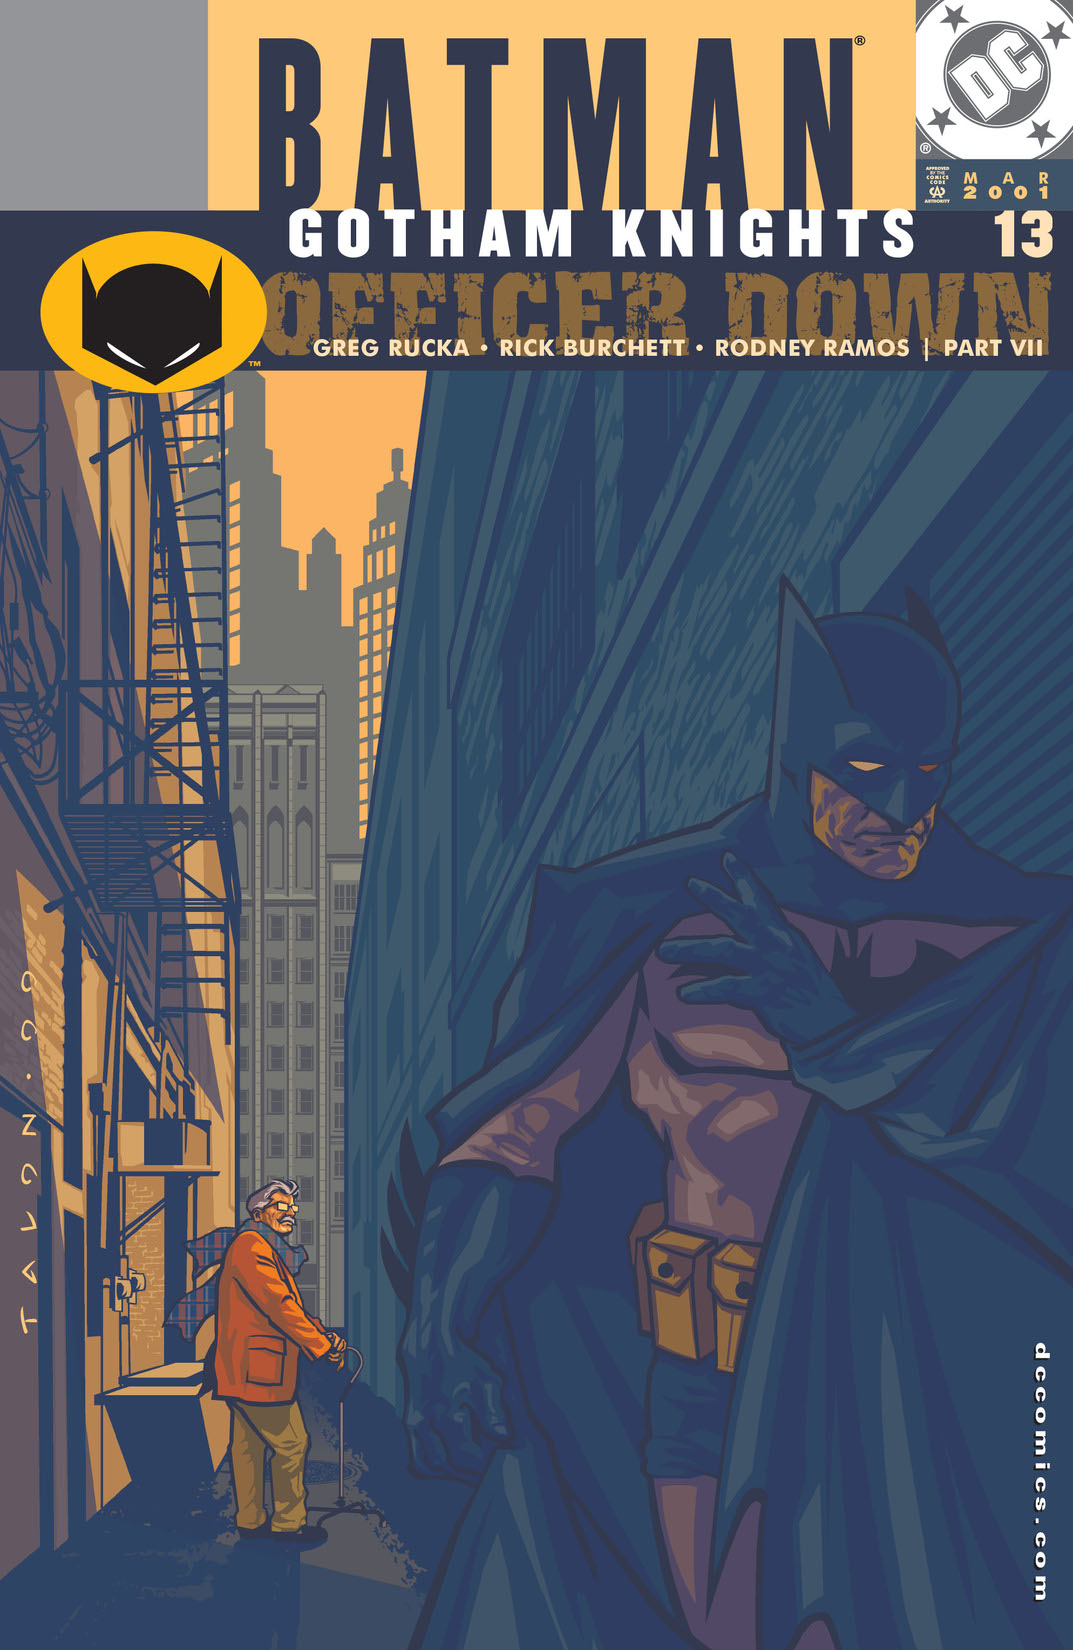 Batman: Gotham Knights #13 preview images